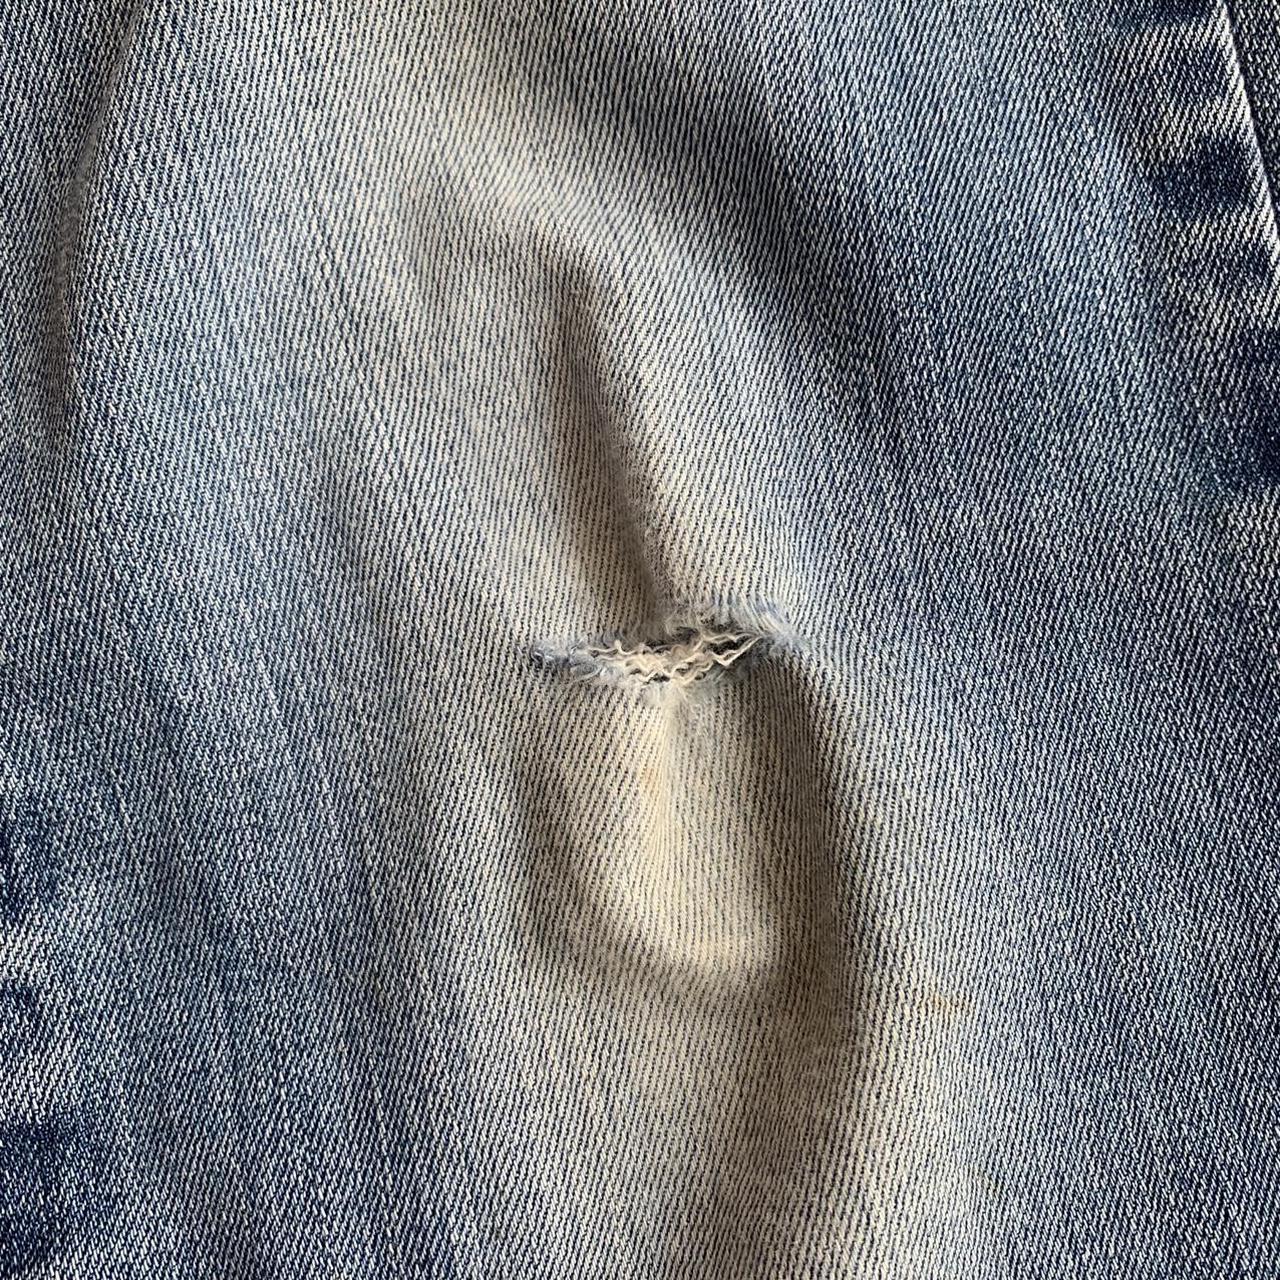 Genuine y2k Levi 501 bootcut jeans, waist 28 leg 30. - Depop